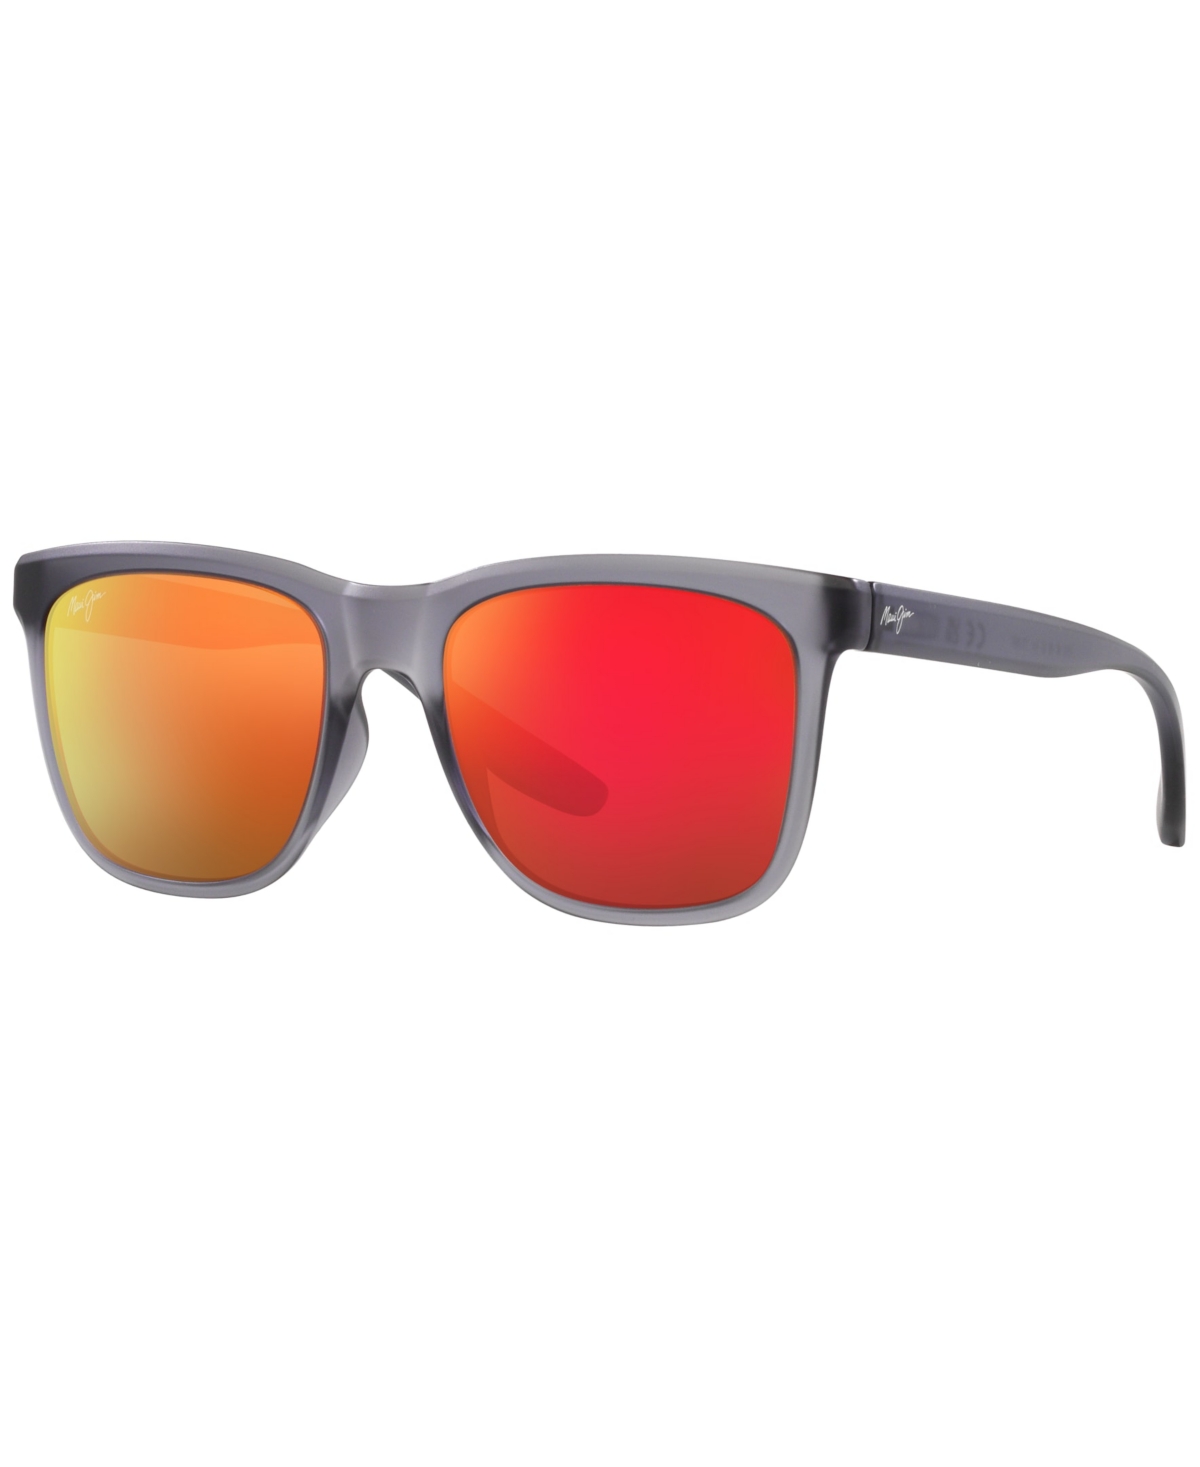 Maui Jim Unisex Polarized Sunglasses, Mj00069155-z 55 In Gray Clear